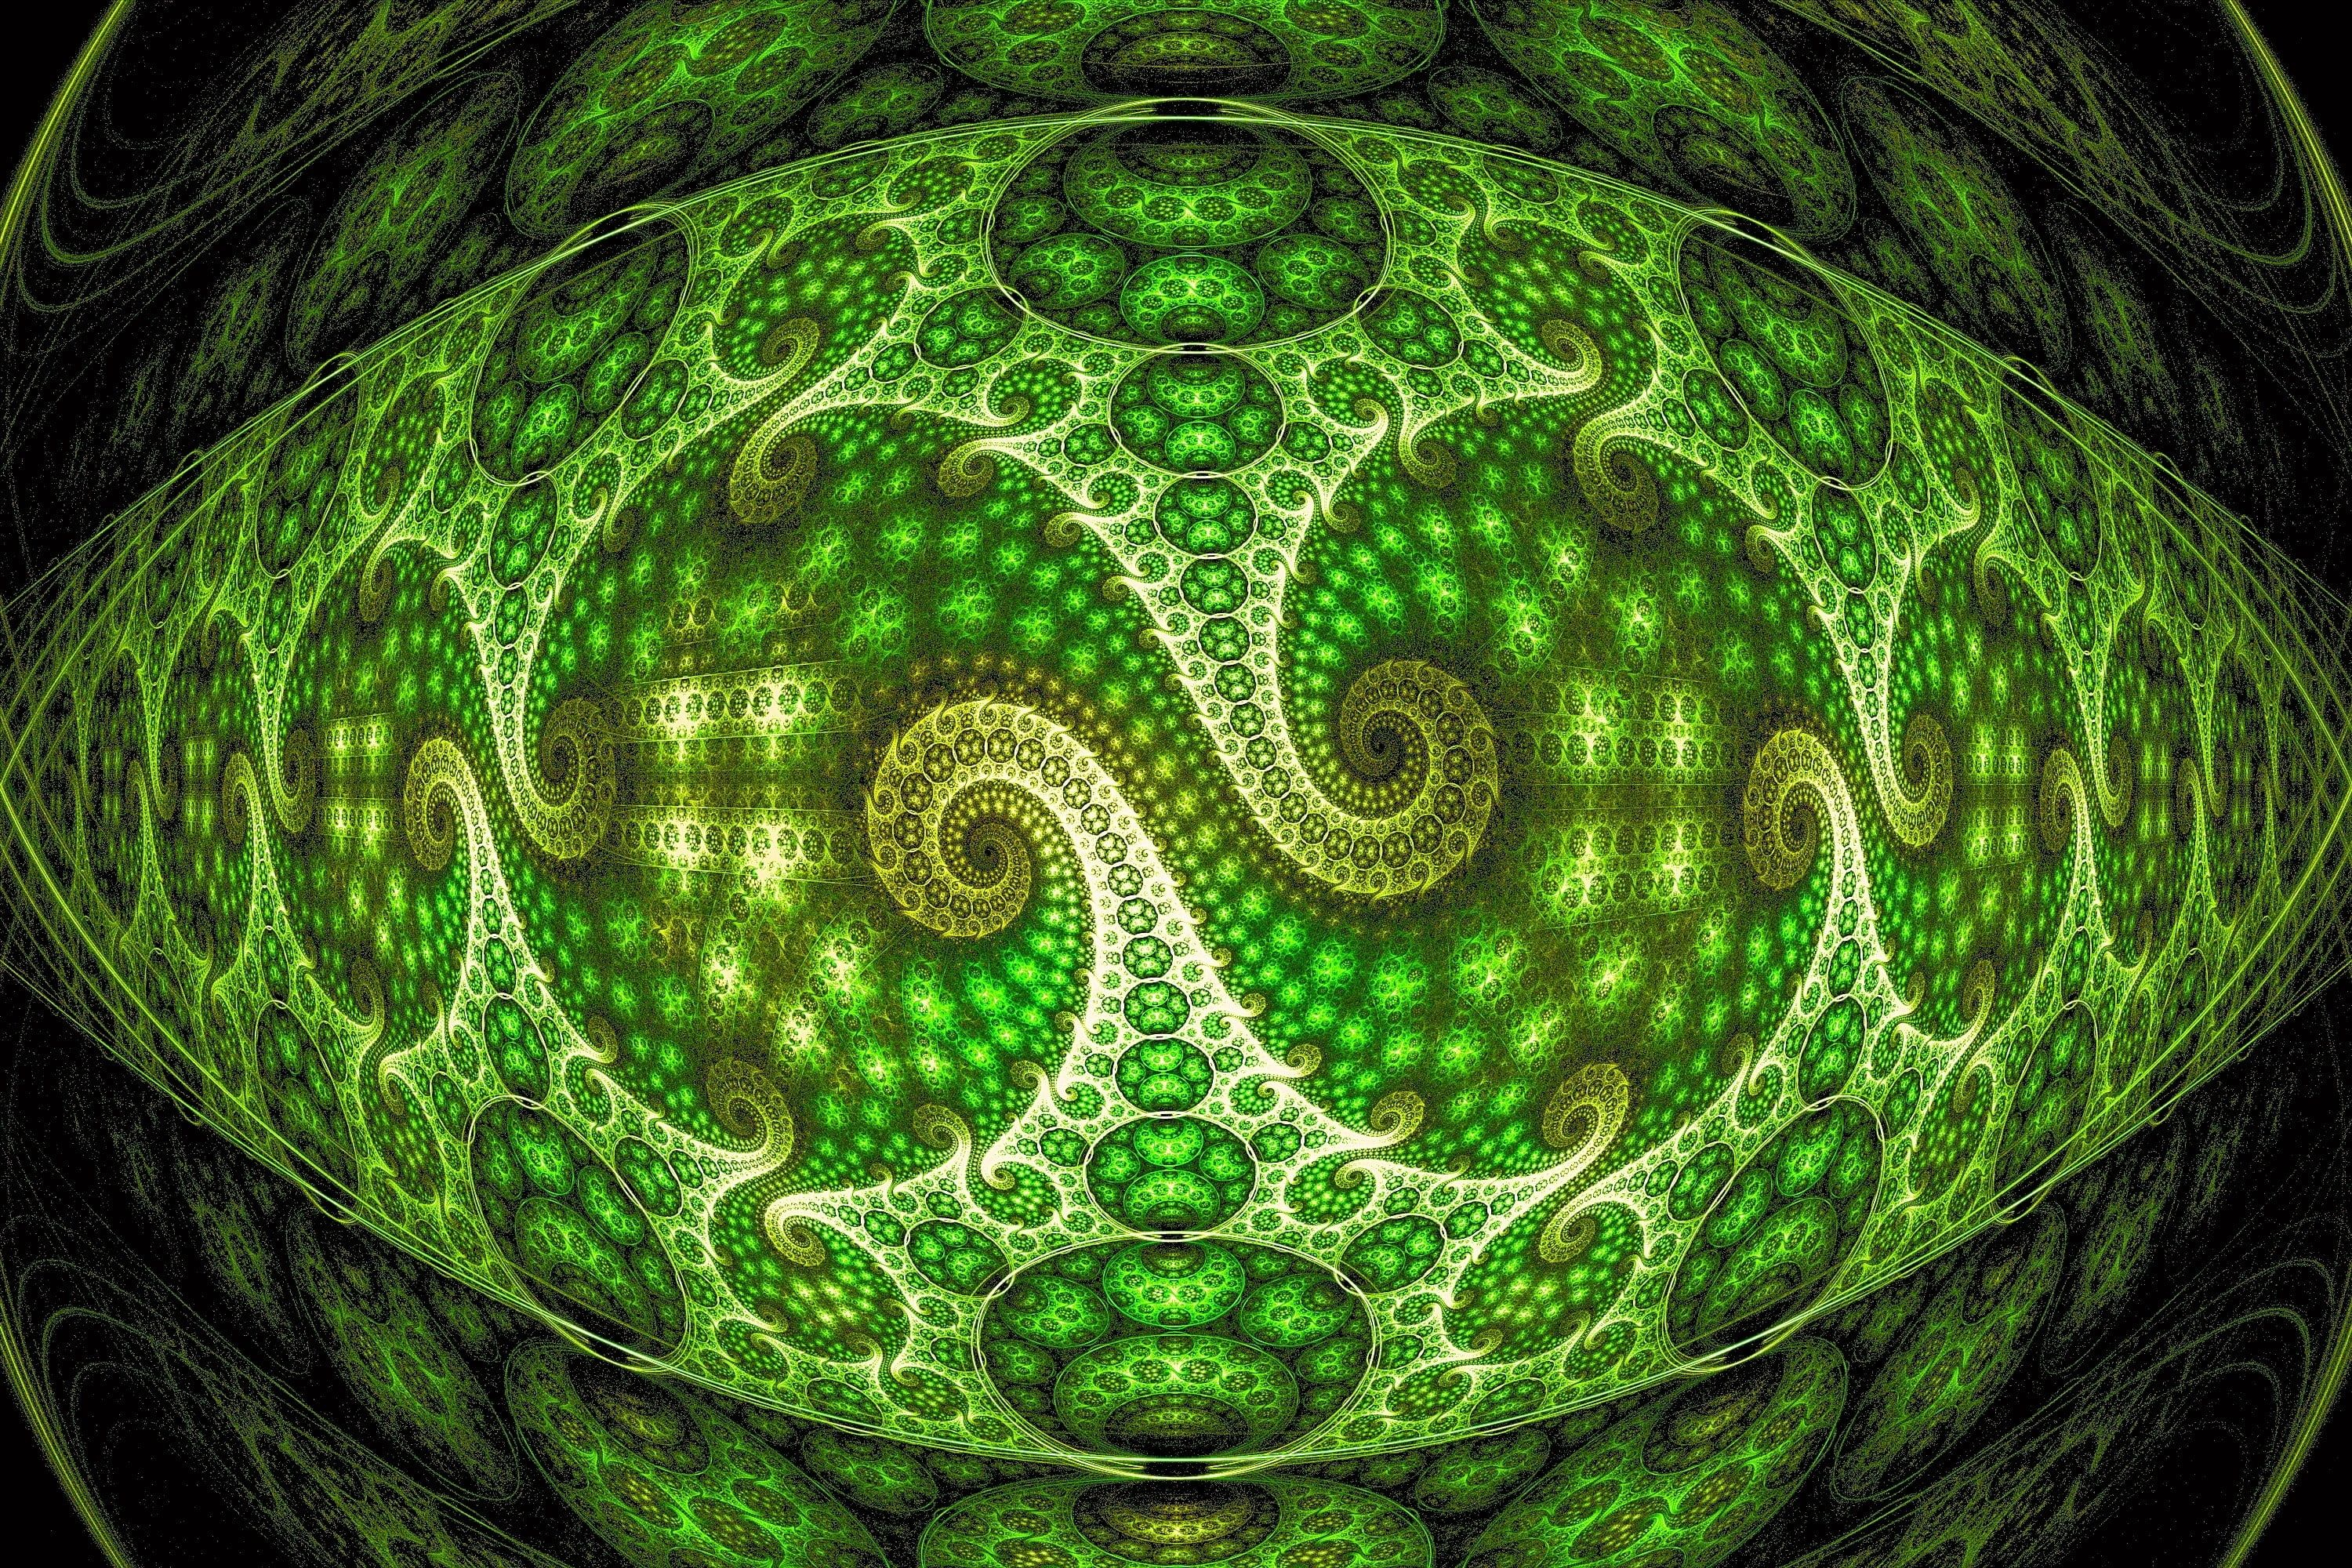 3000x2000 Optical illusion #Zoom #Background #Green #Patterns #2K #wallpaper #hdwallpaper #desktop | Optical illusions, Optical illusion wallpaper, Color optical illusions